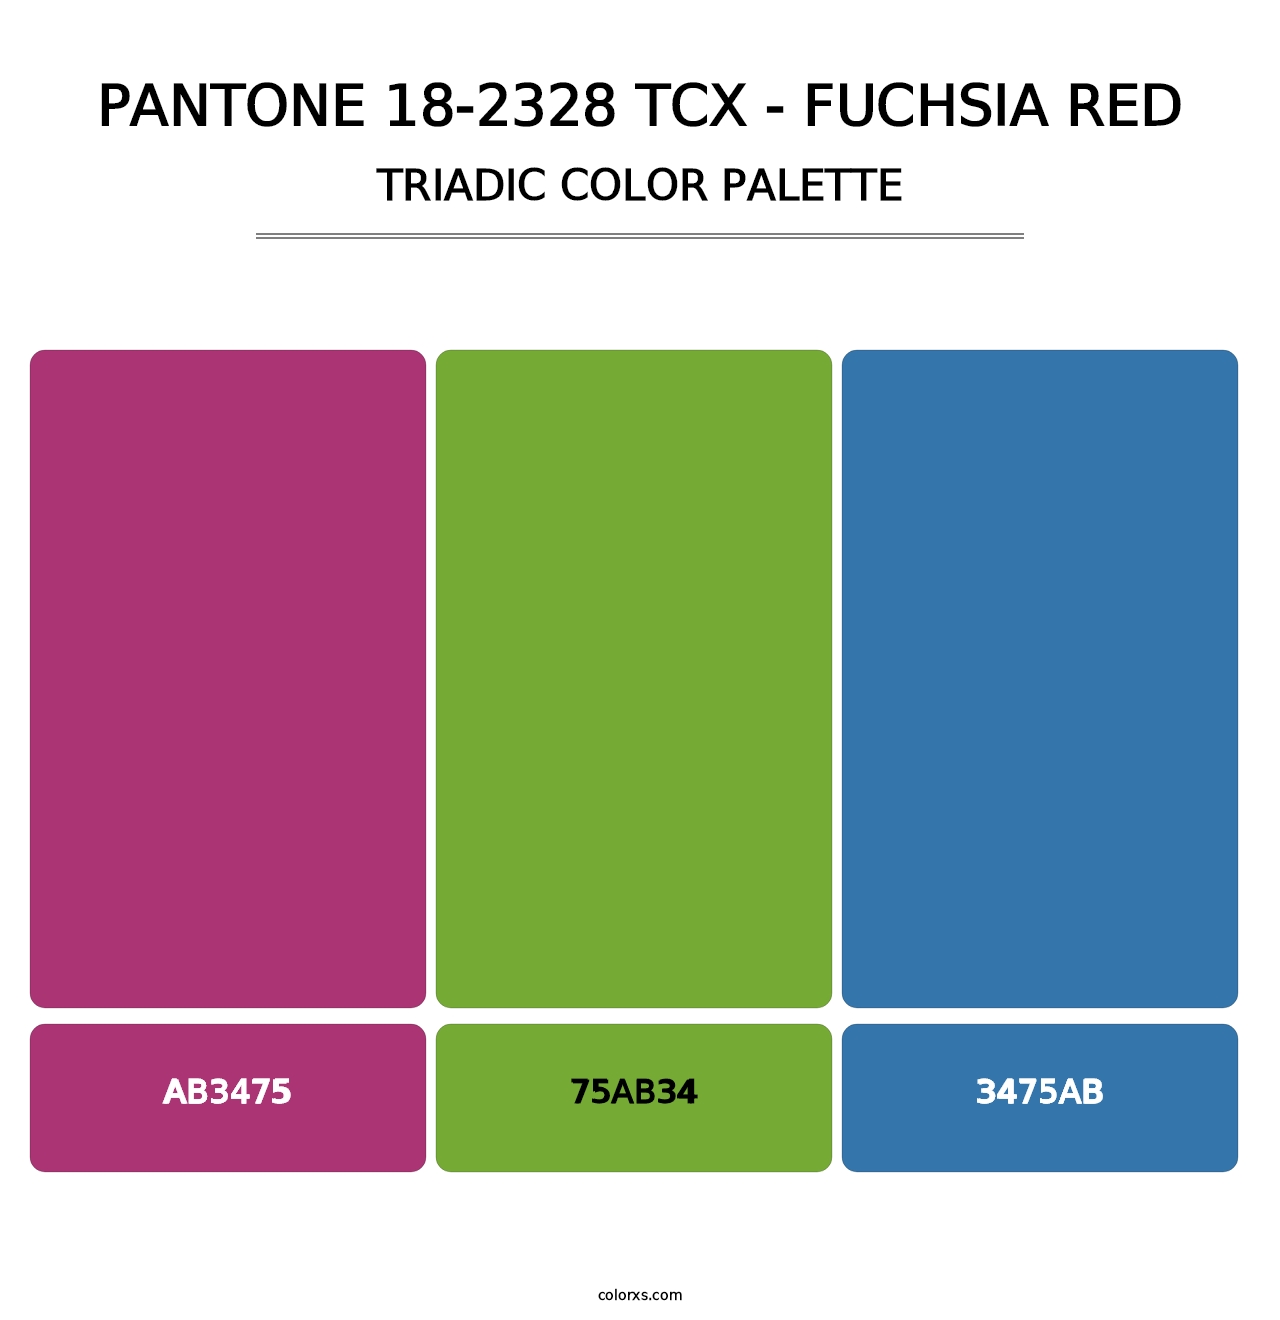 PANTONE 18-2328 TCX - Fuchsia Red - Triadic Color Palette